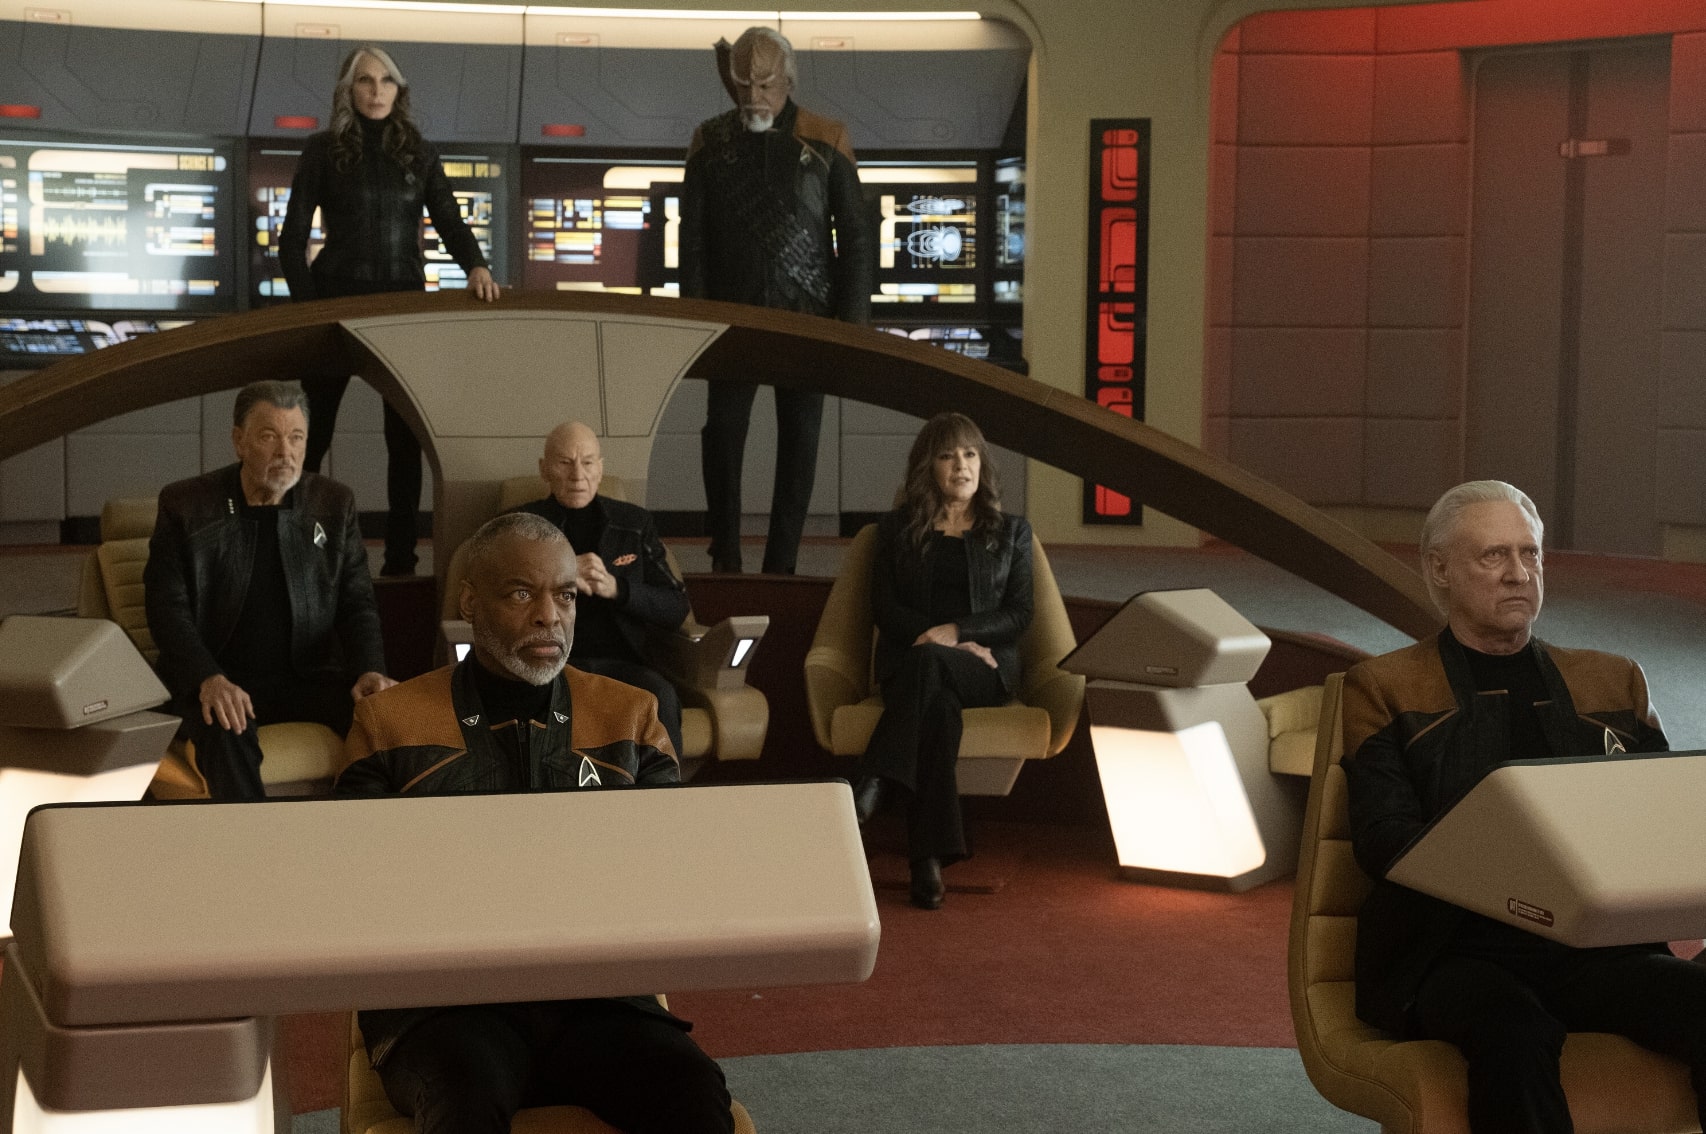 'Picard' S3E10 'The Last Generation' sets up a final Borg showdown